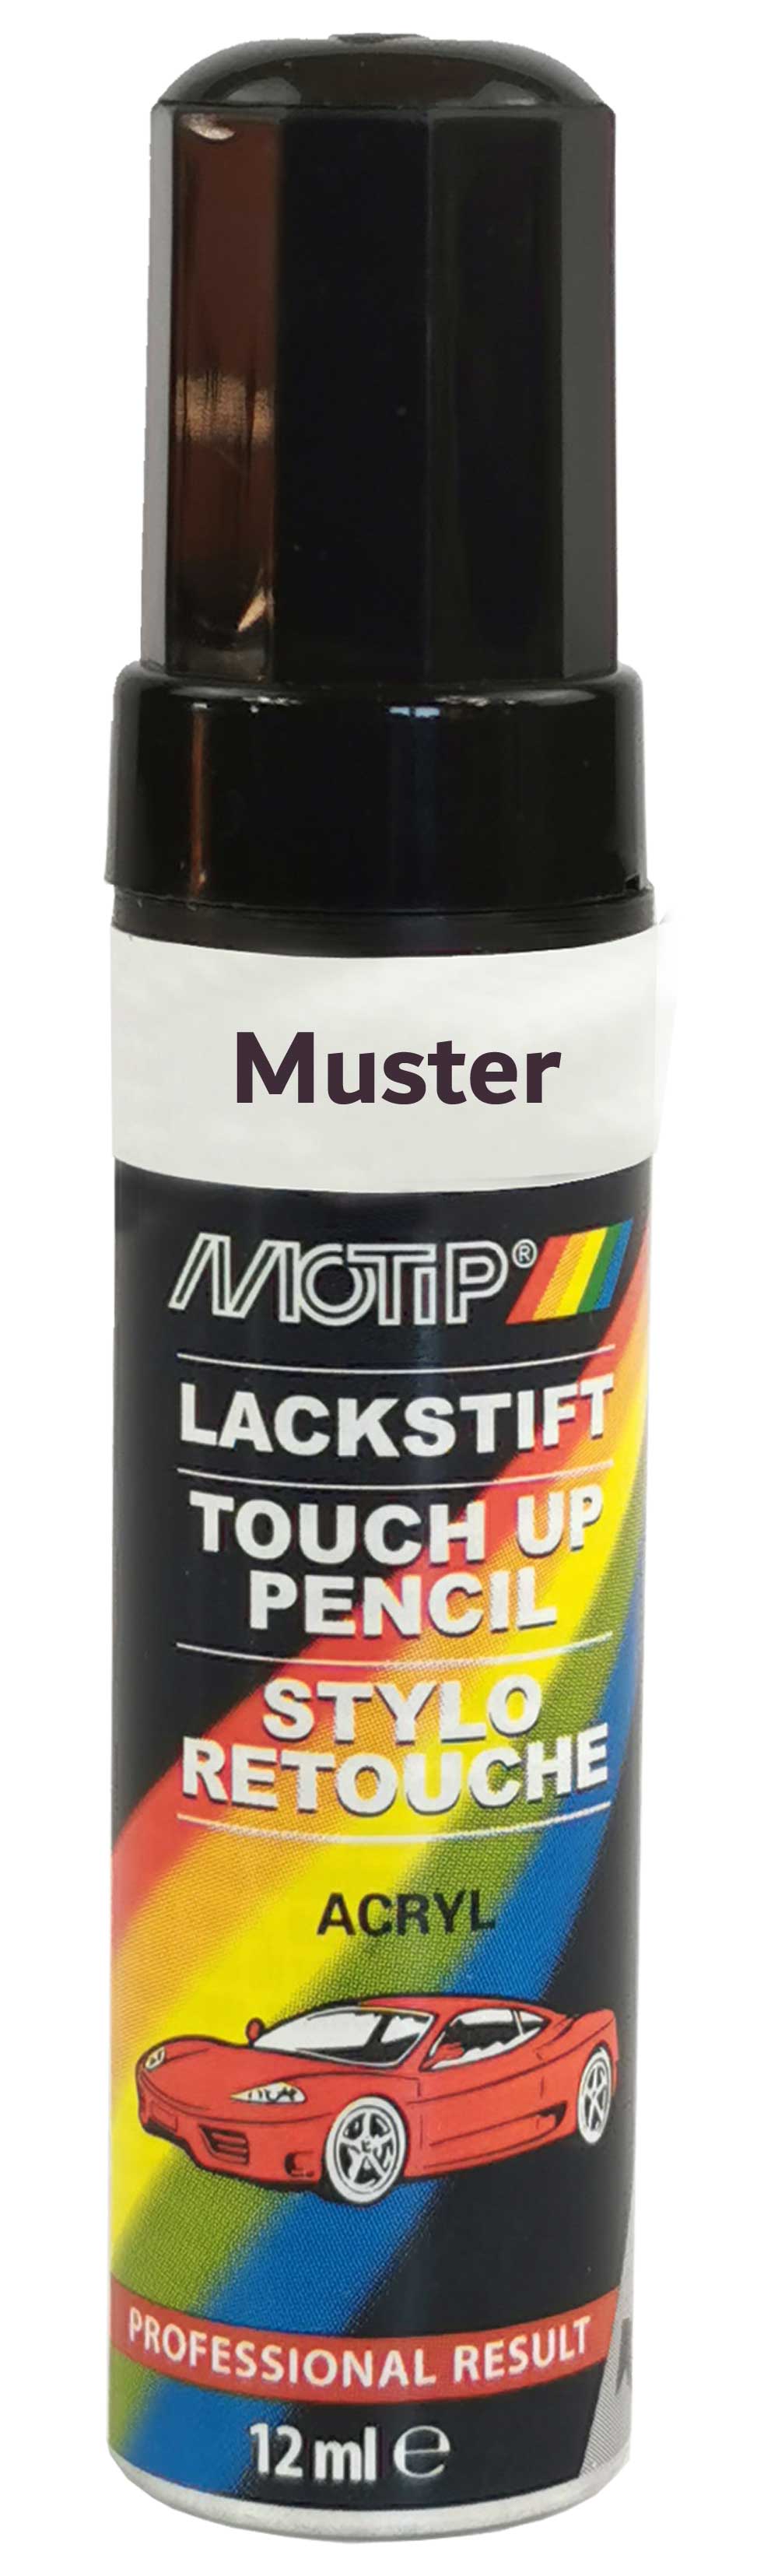 Motip Lack-Stift  grau 12ml 955305